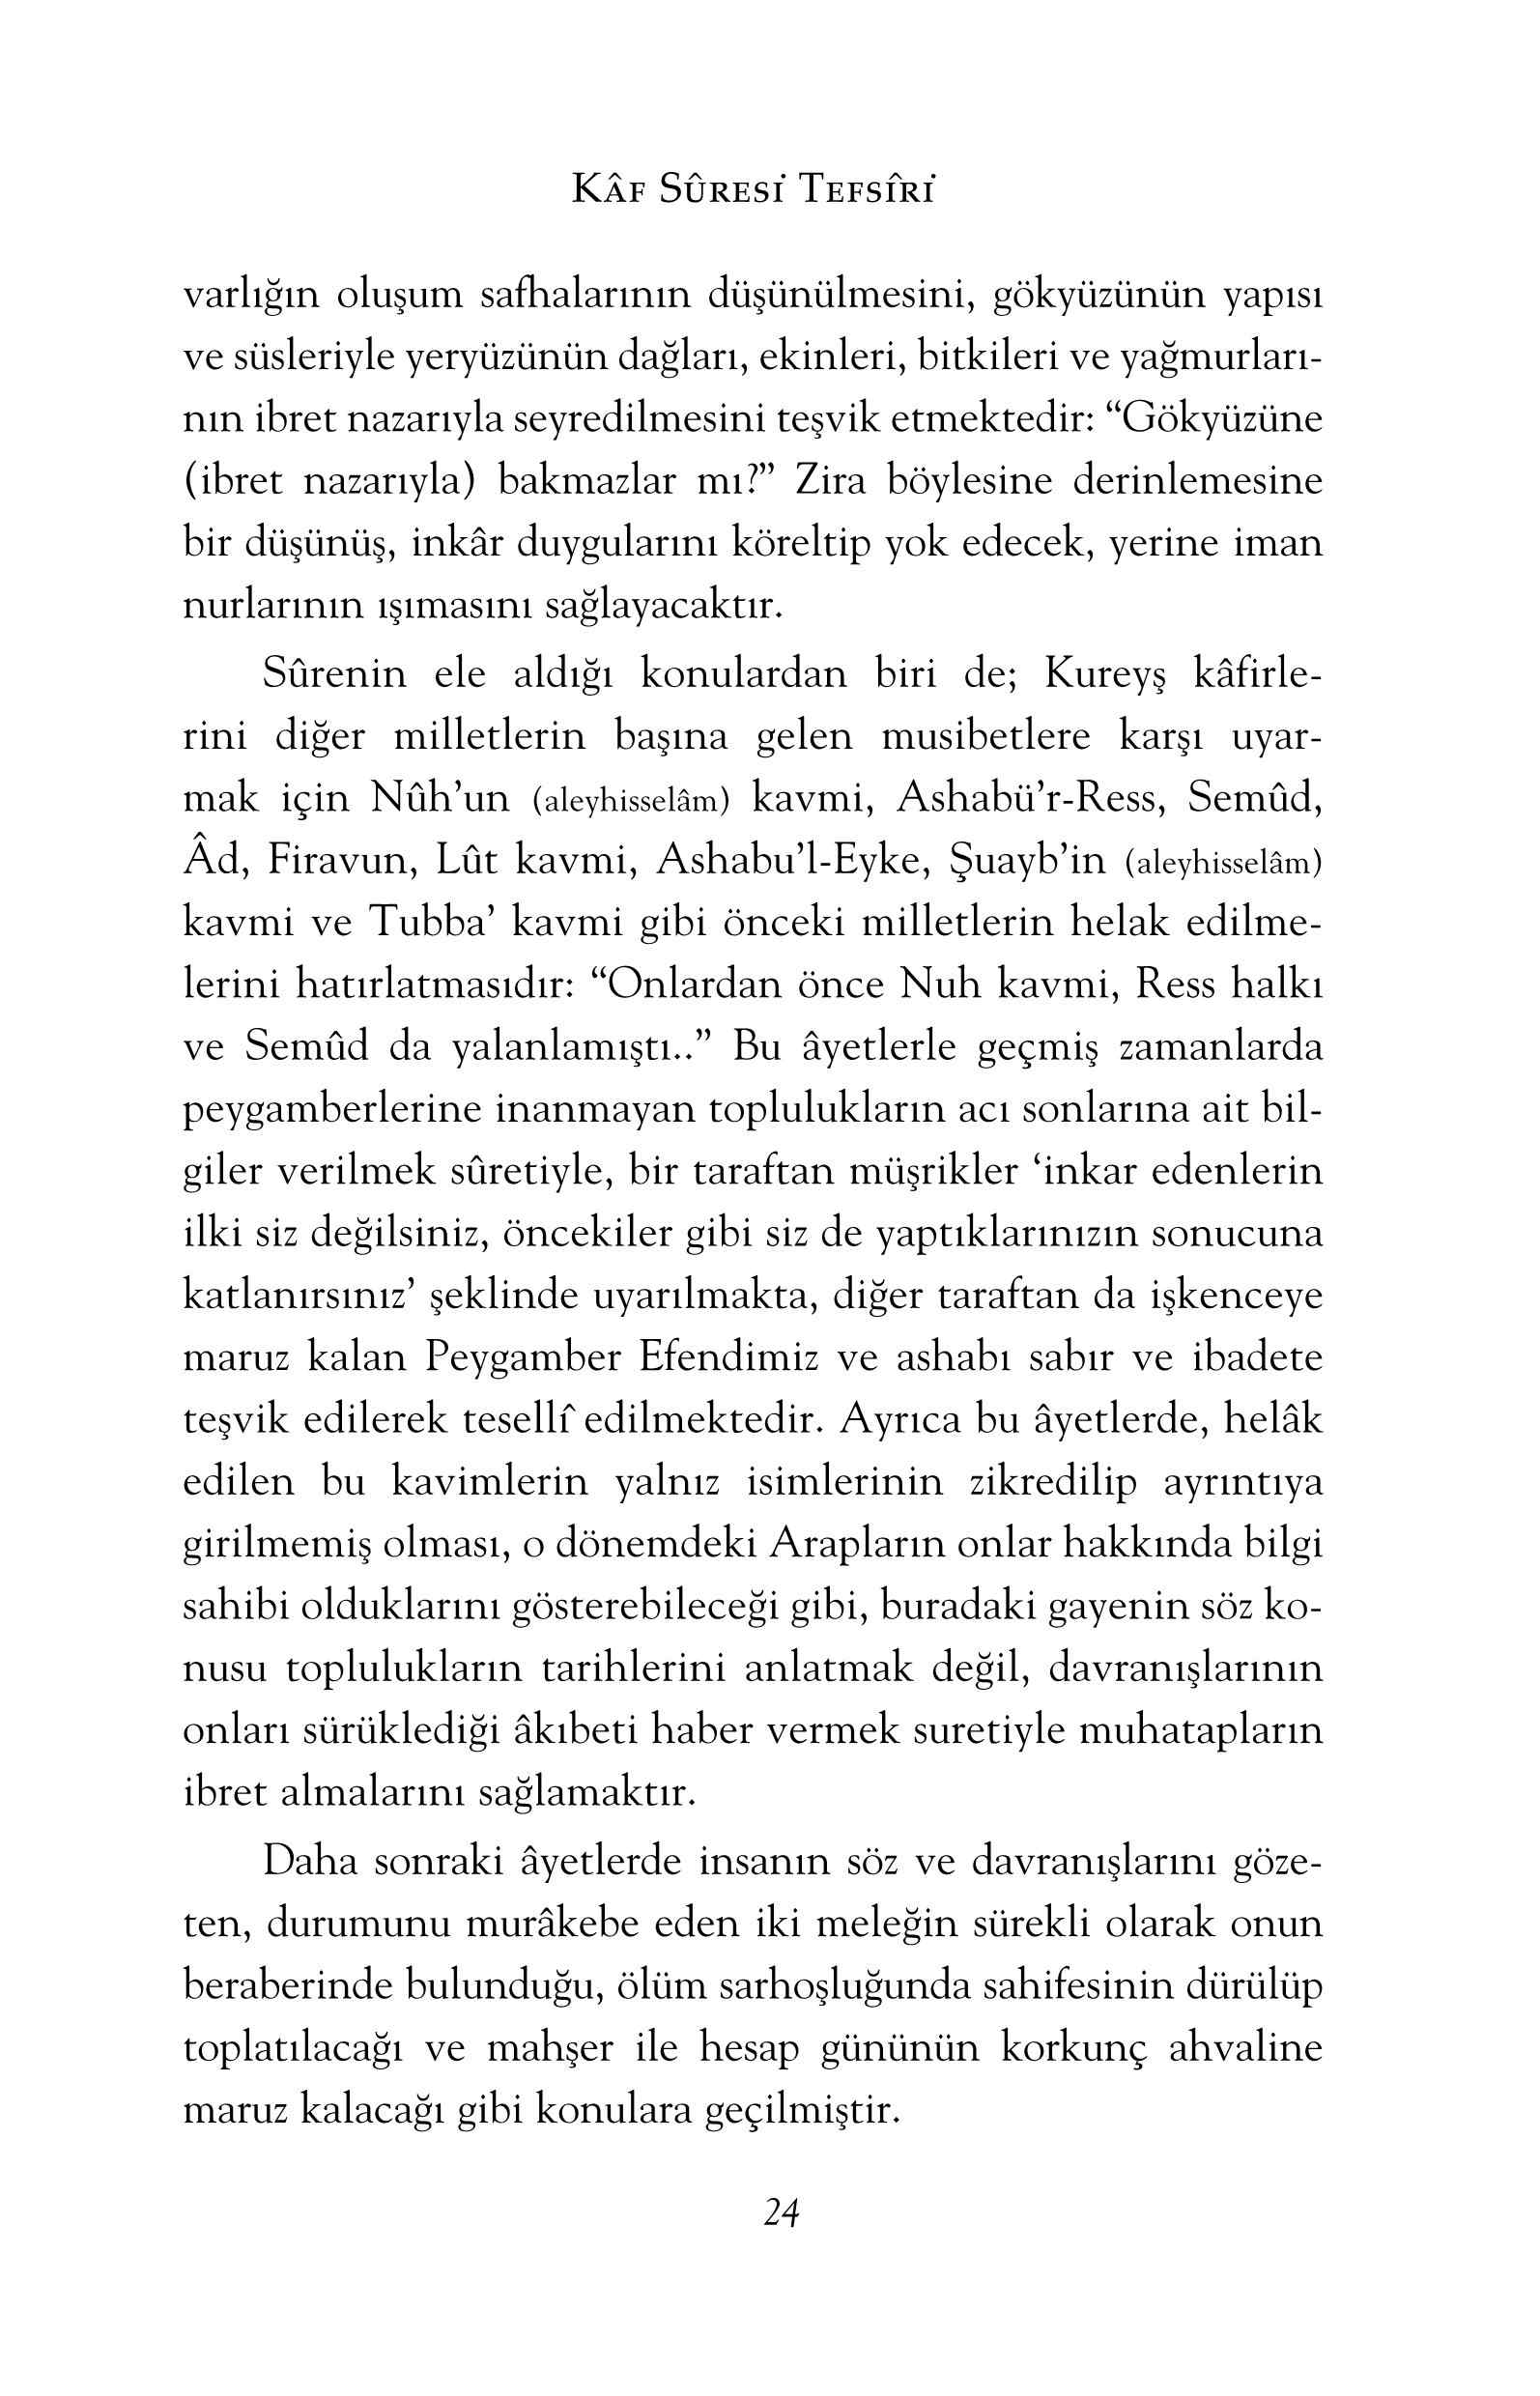 Davut Ayduz - Kaf Suresi Tefsiri - IsikAkademiY.pdf, 193-Sayfa 